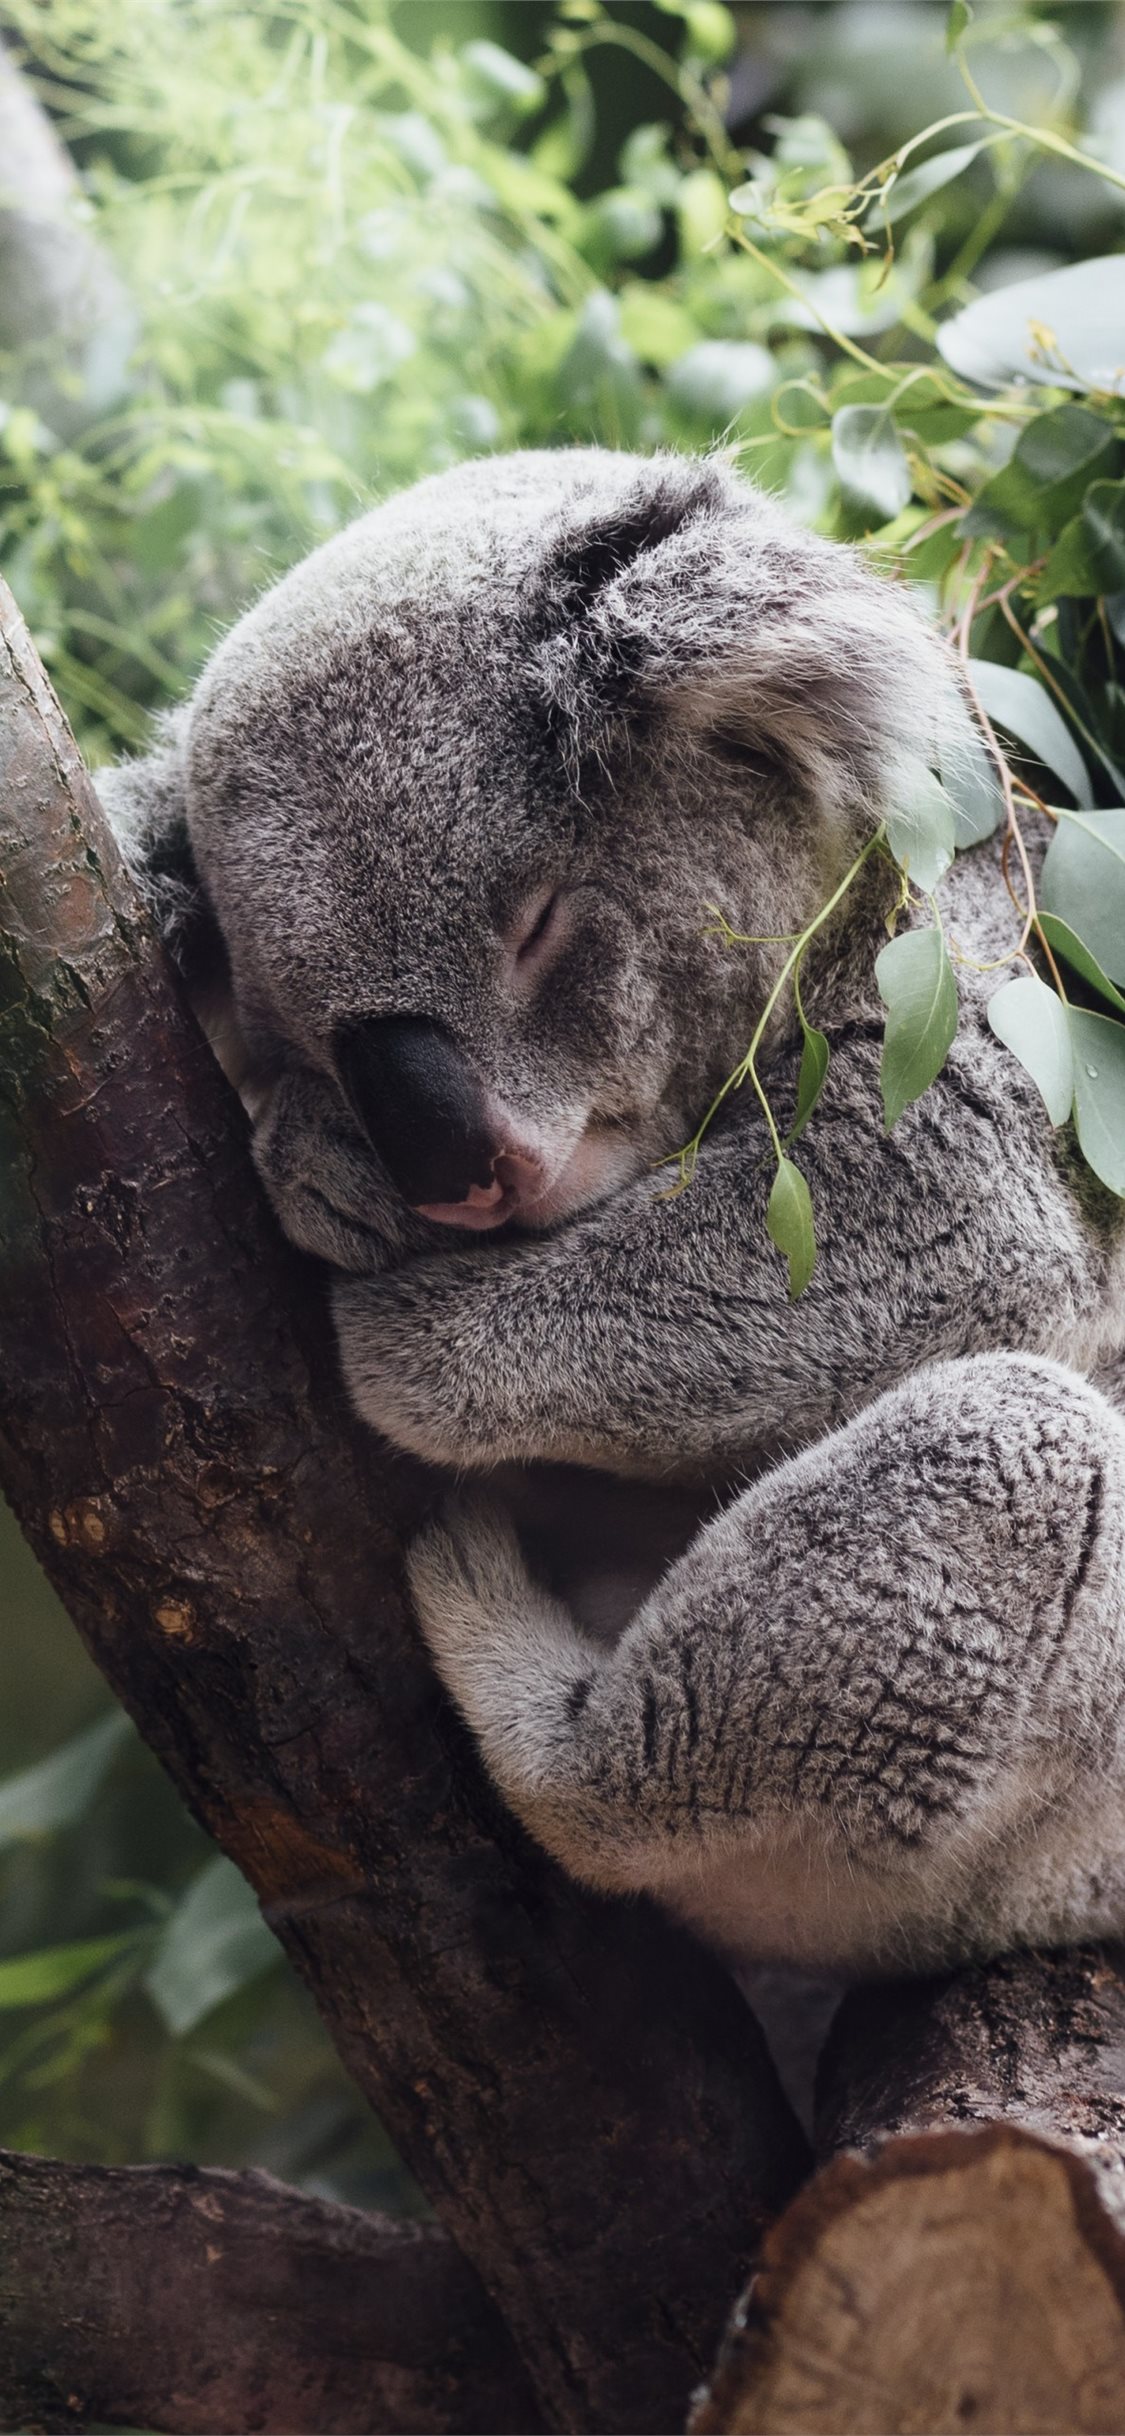 20200 Cute Koala Stock Photos Pictures  RoyaltyFree Images  iStock  Cute  koala white background